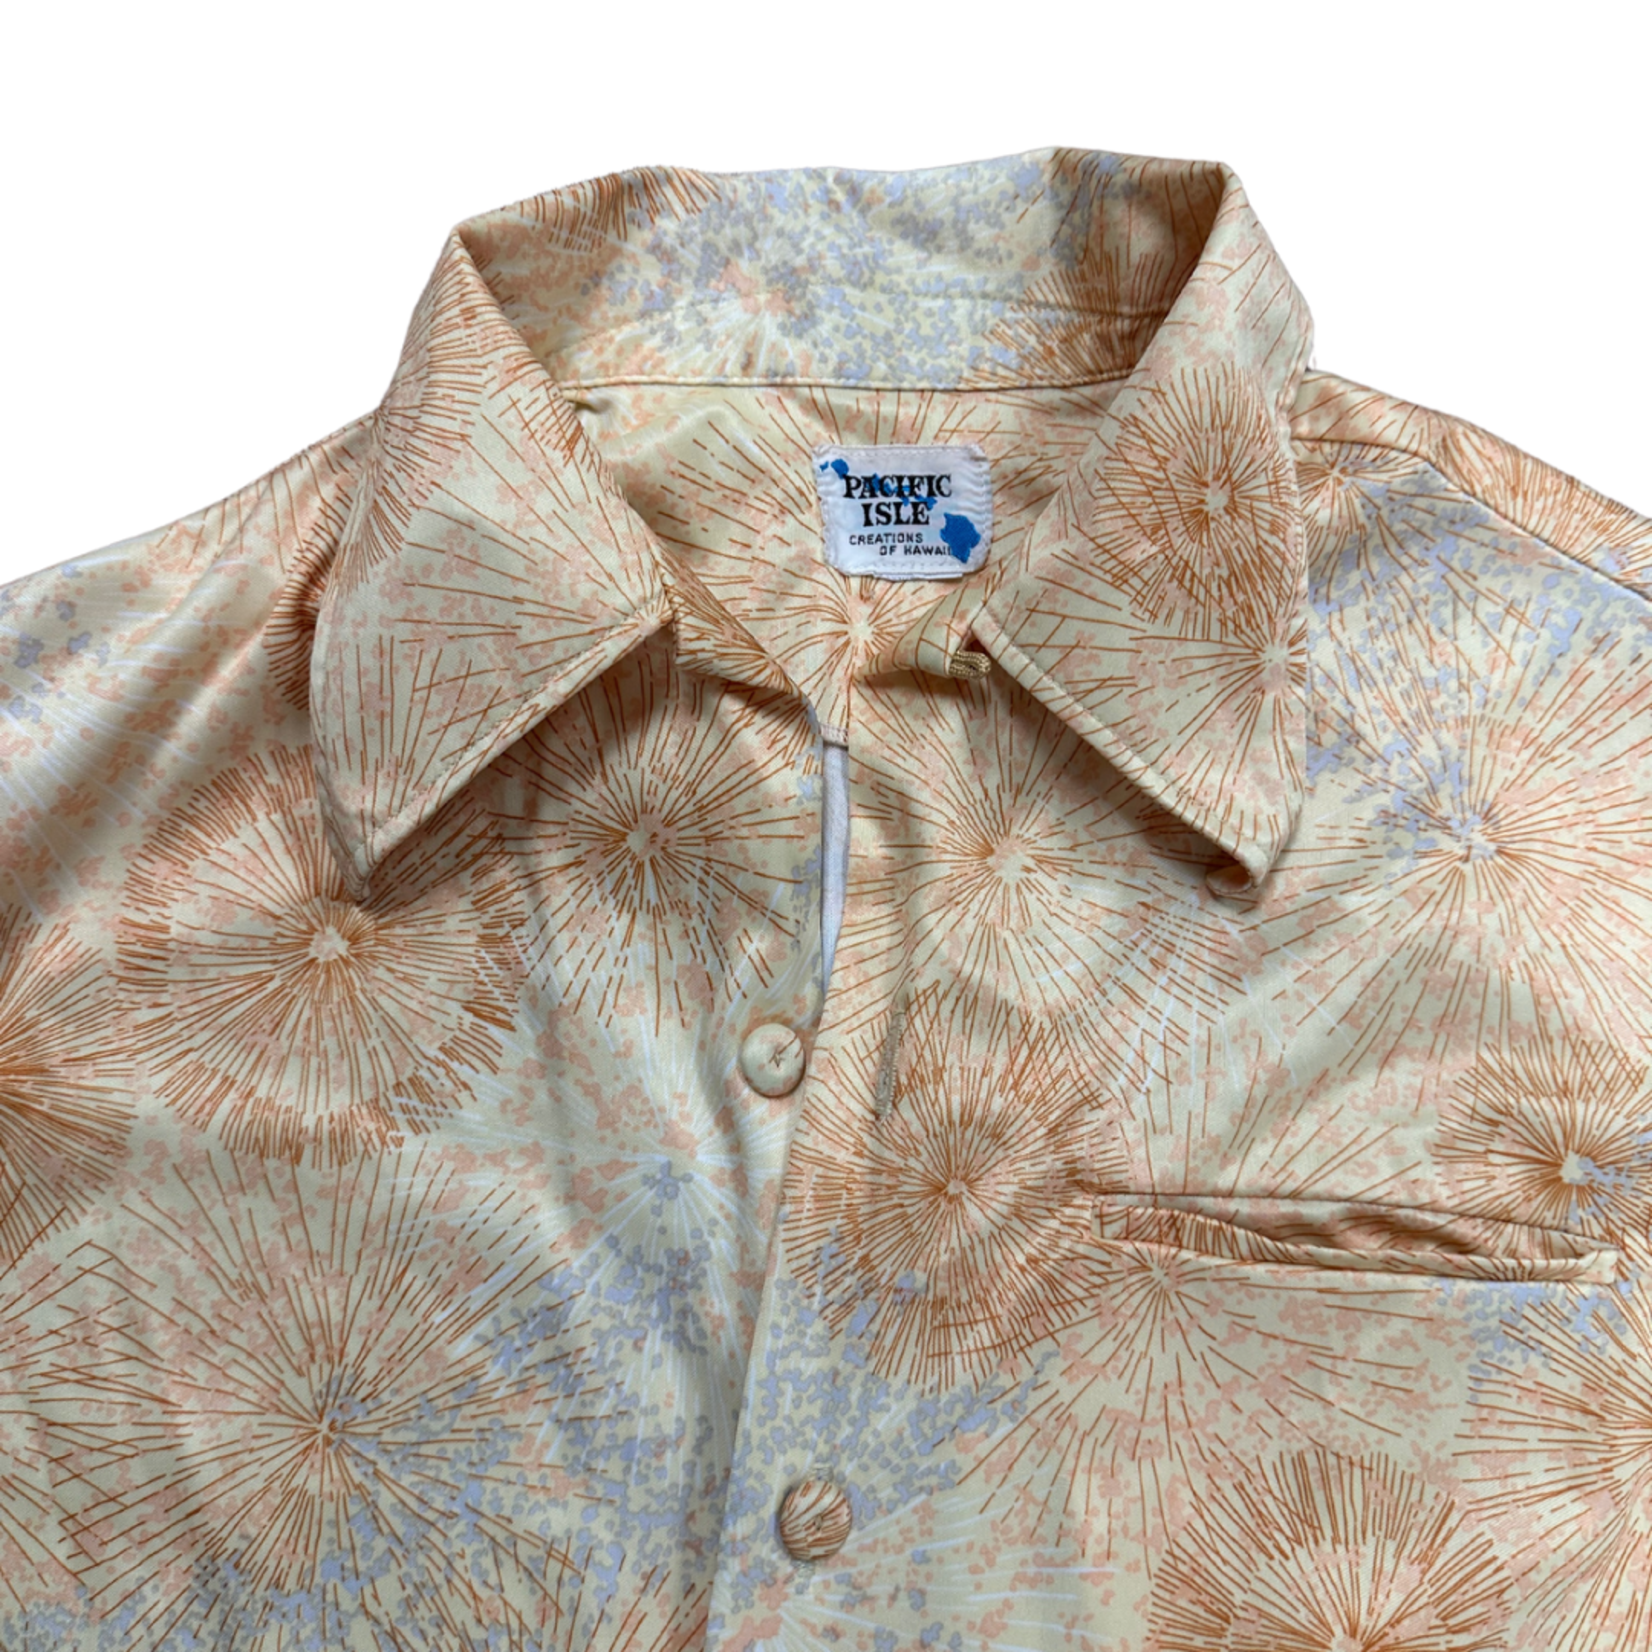 Mission Zero Men’s Vintage Aloha Shirt - Pacific Isle - Peach Starburst - Medium